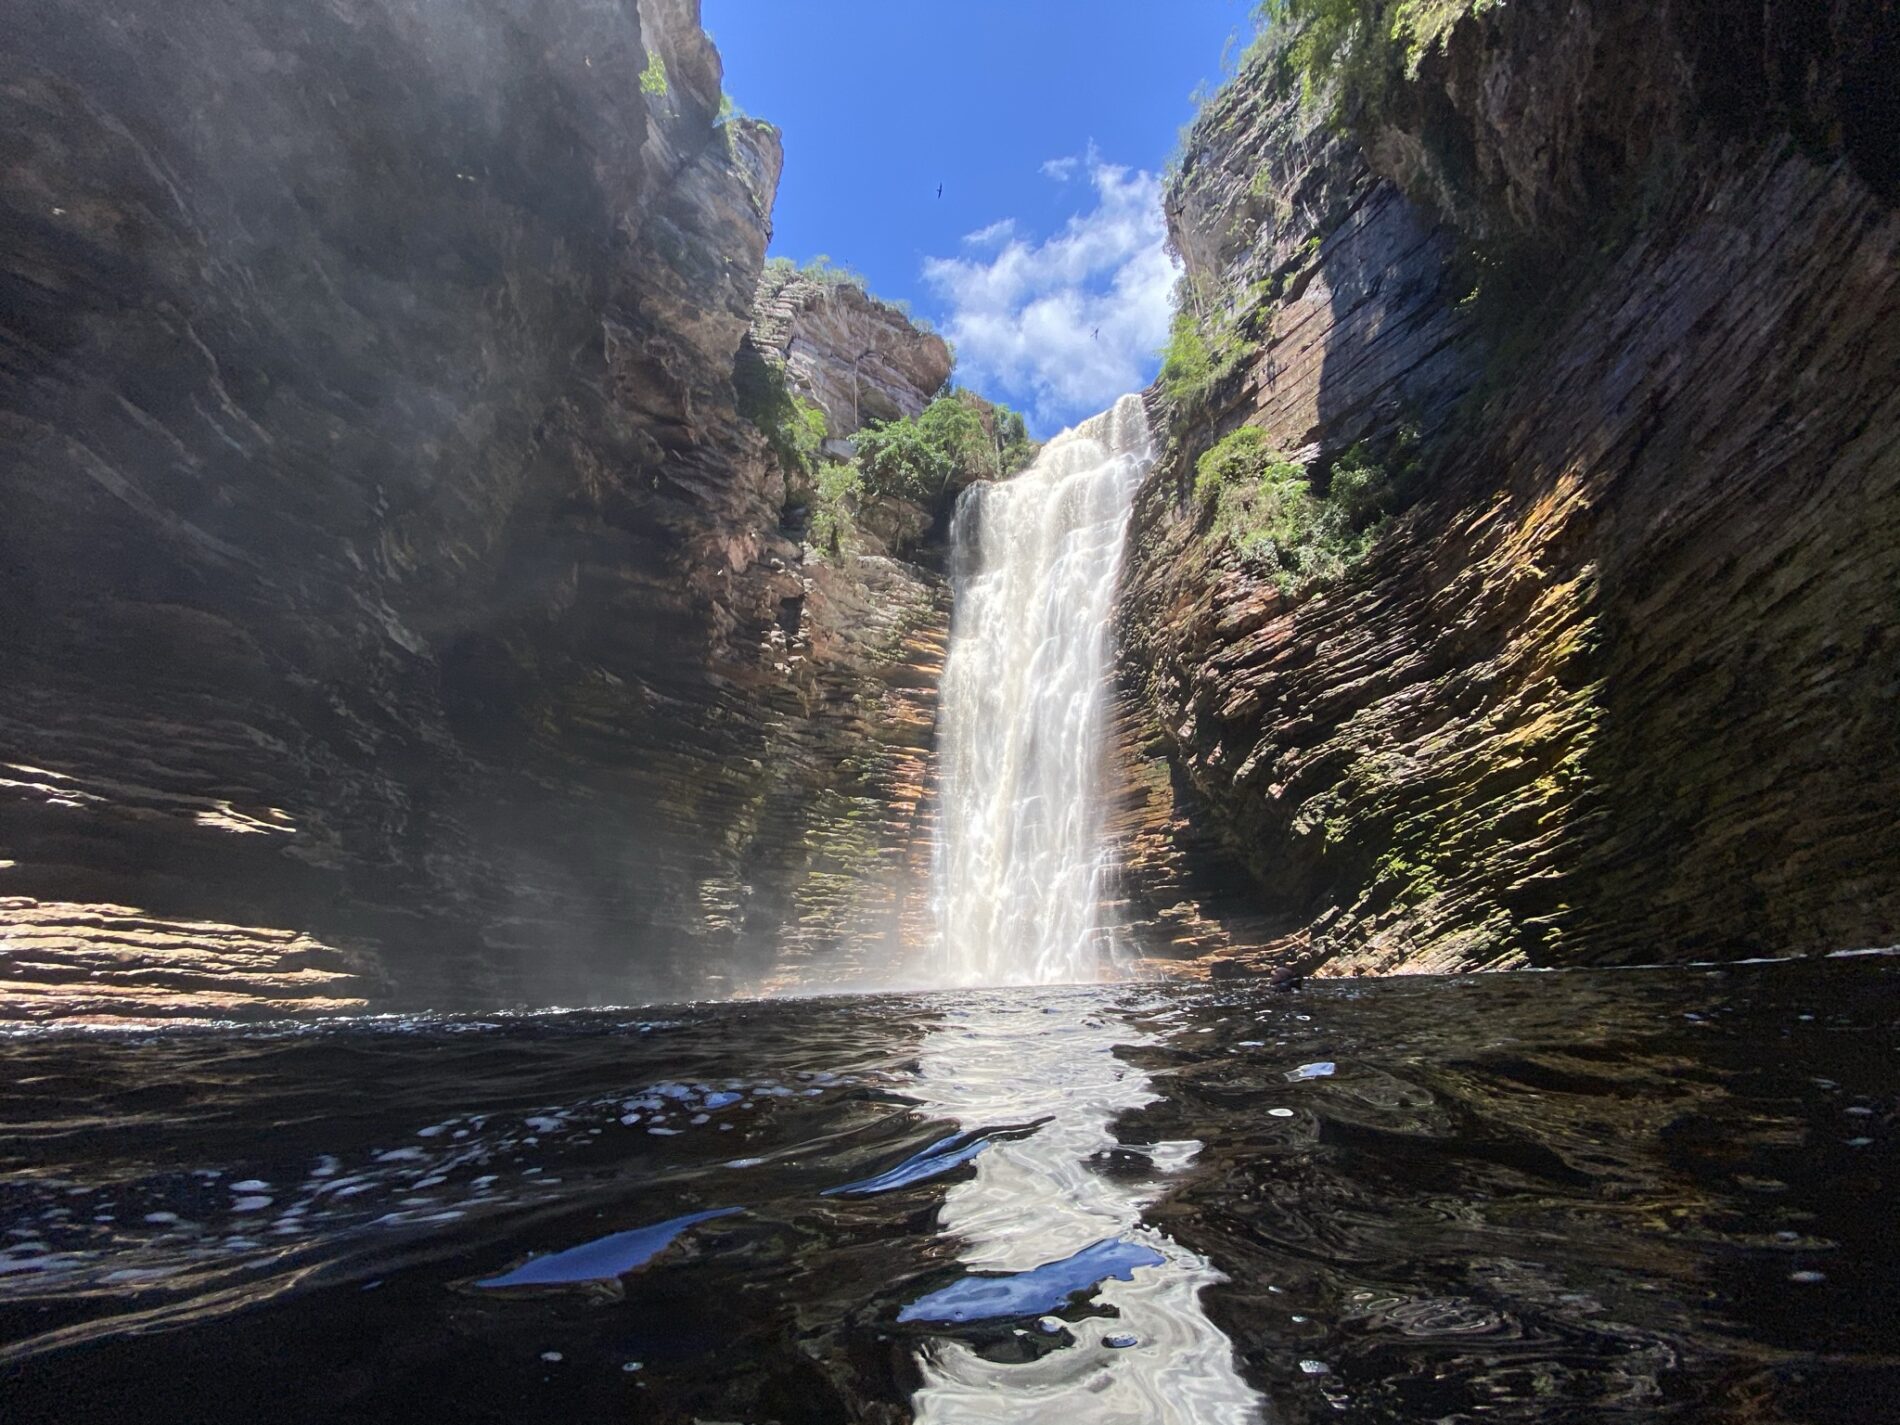 Buracão Waterfall - What to do in Chapada Diamantina